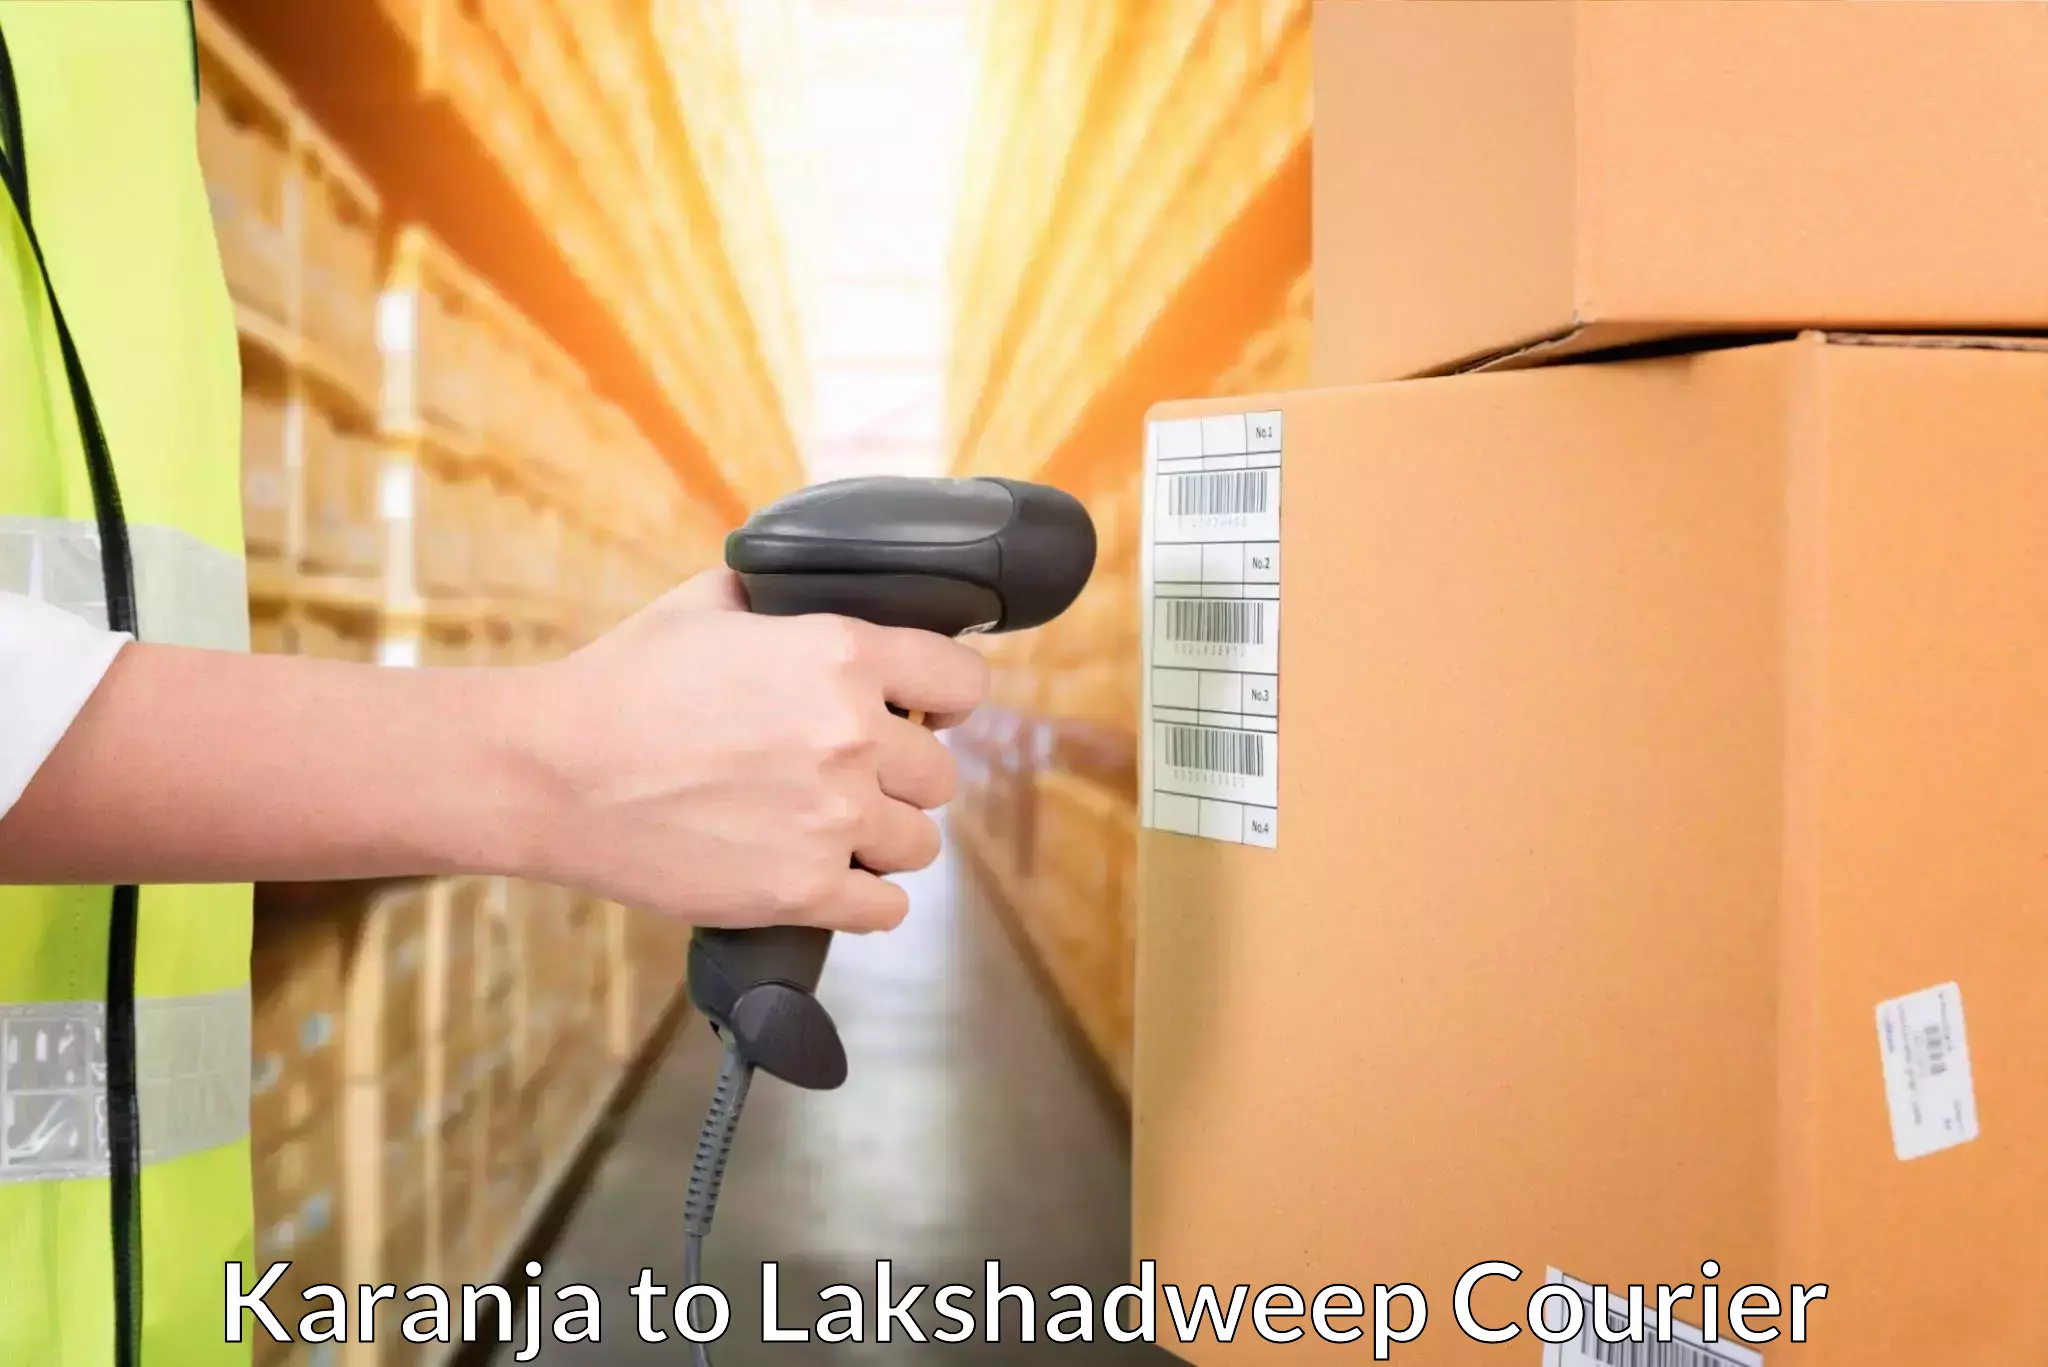 Courier service innovation Karanja to Lakshadweep